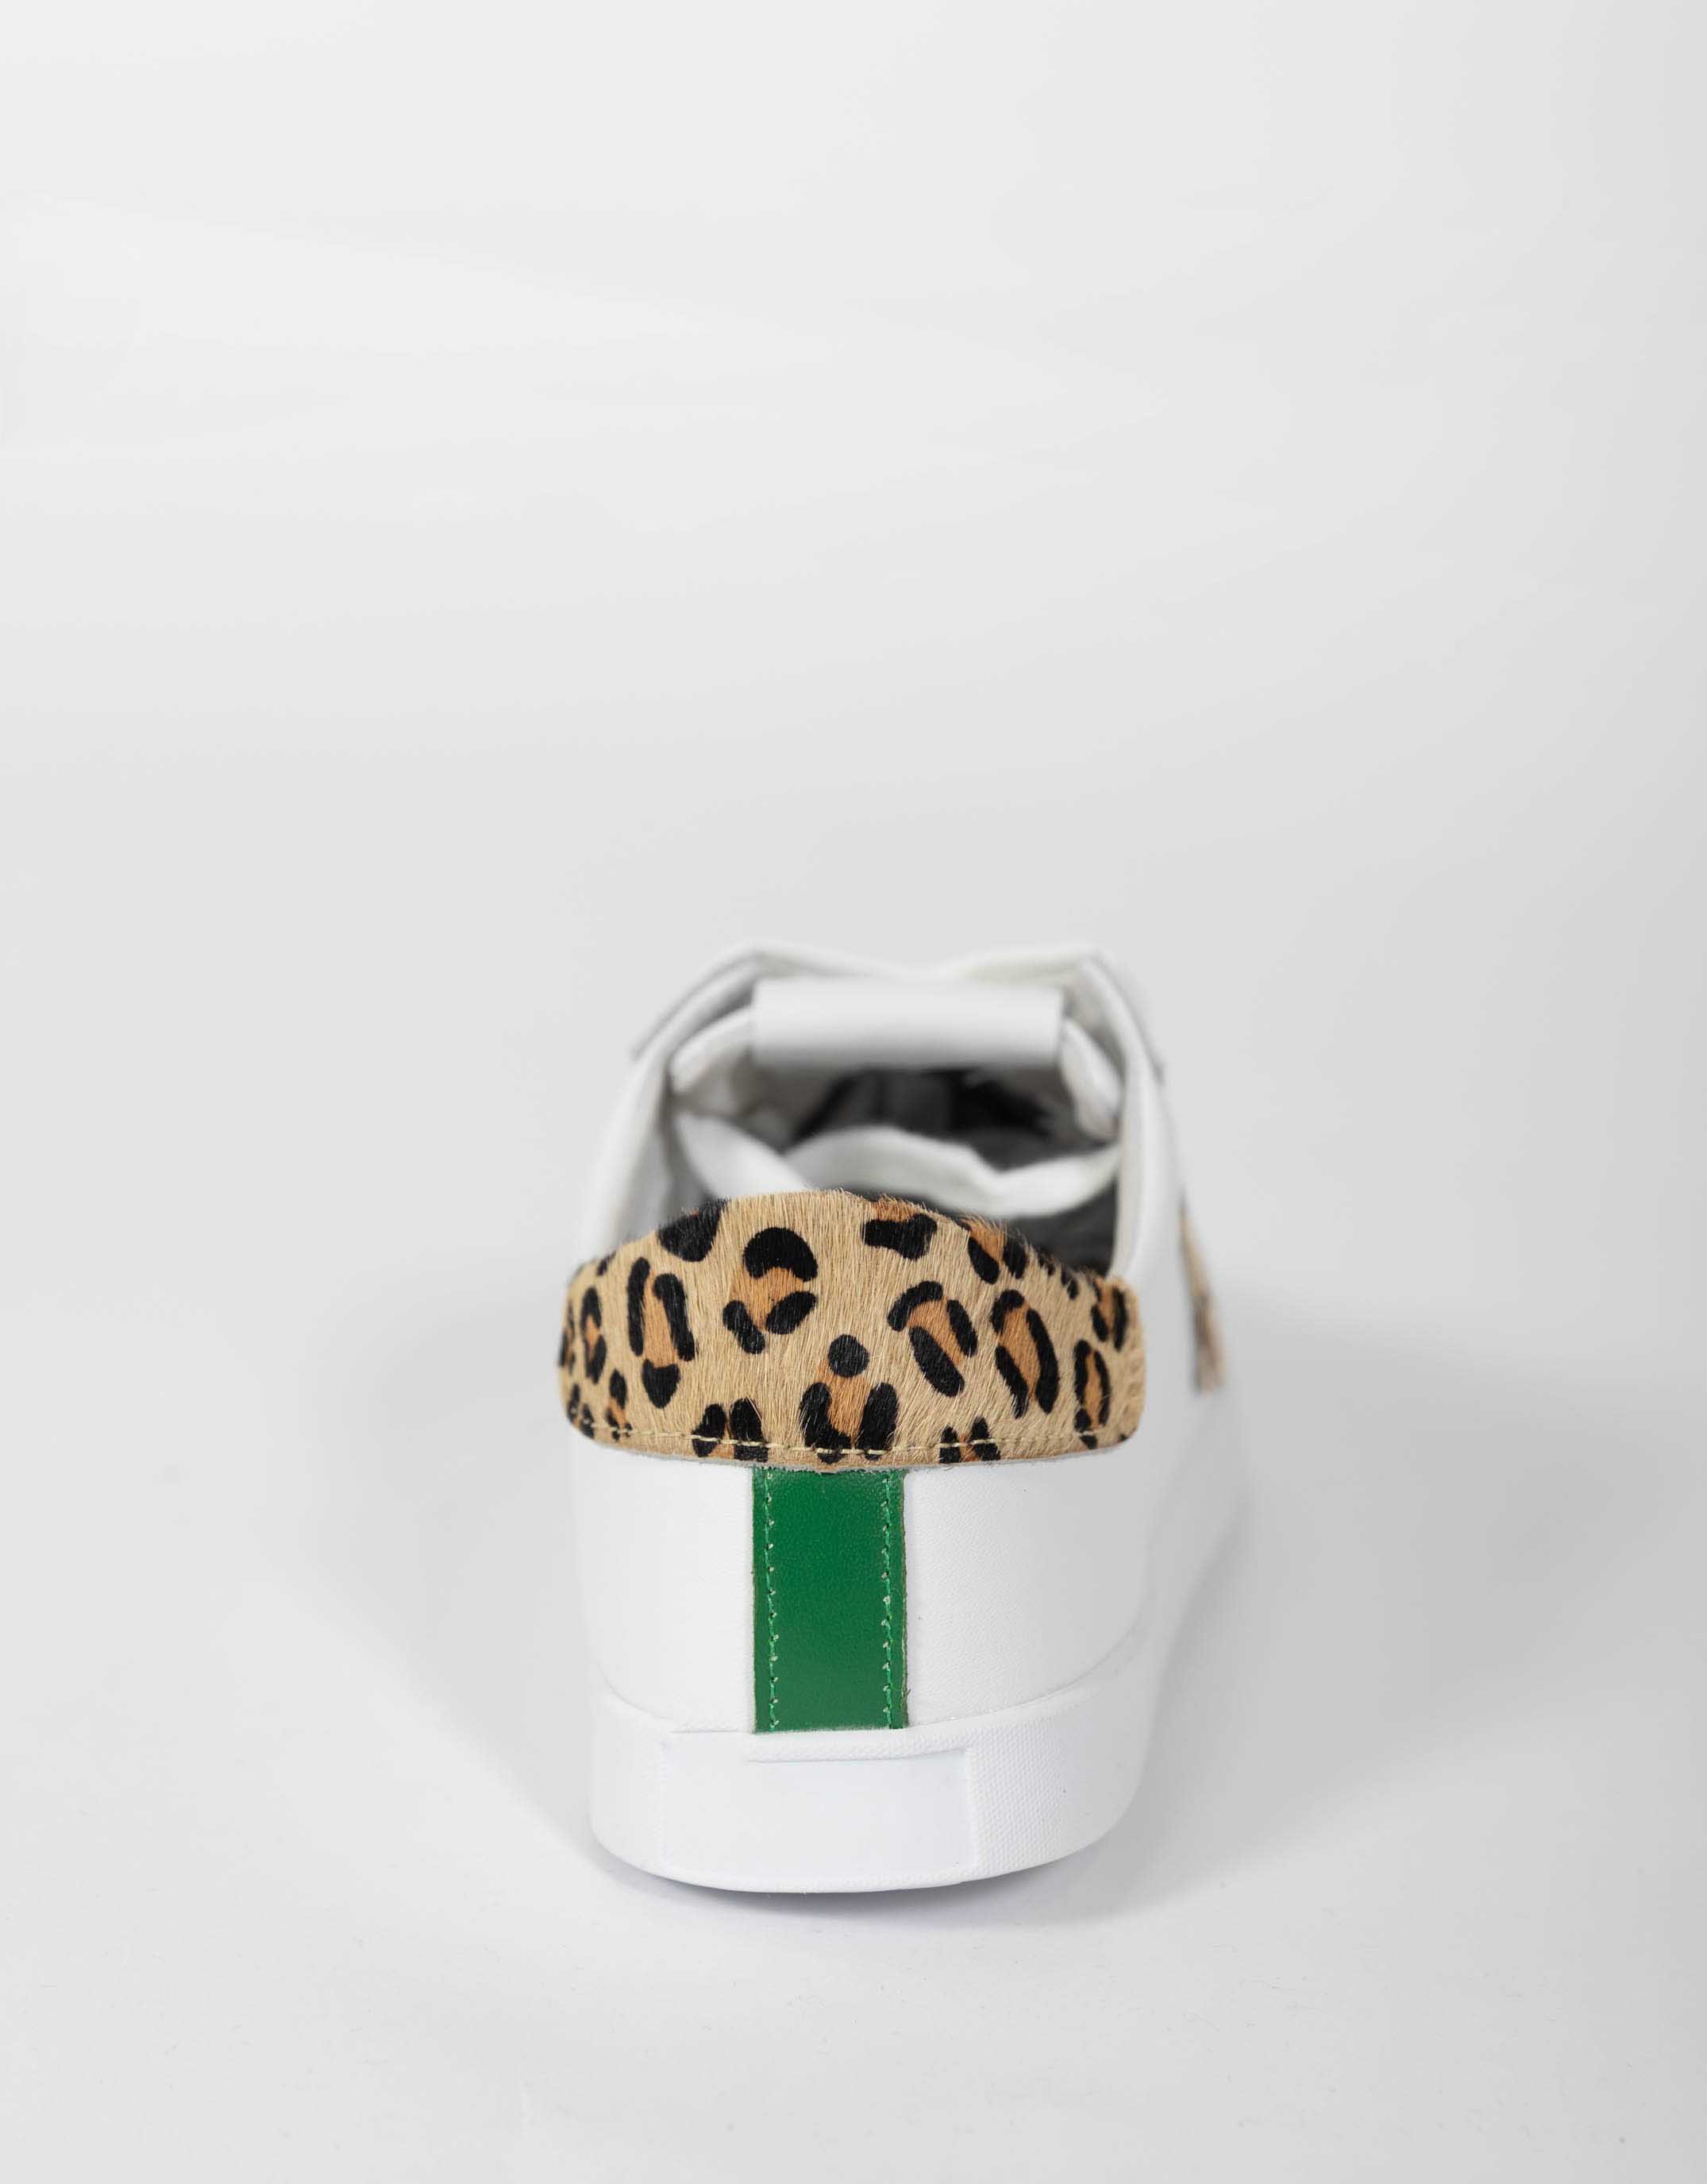 paulaglazebrook. Women's Clothing Brooklyn Leather Sneakers White/Leopard/Emerald Women's Accessories